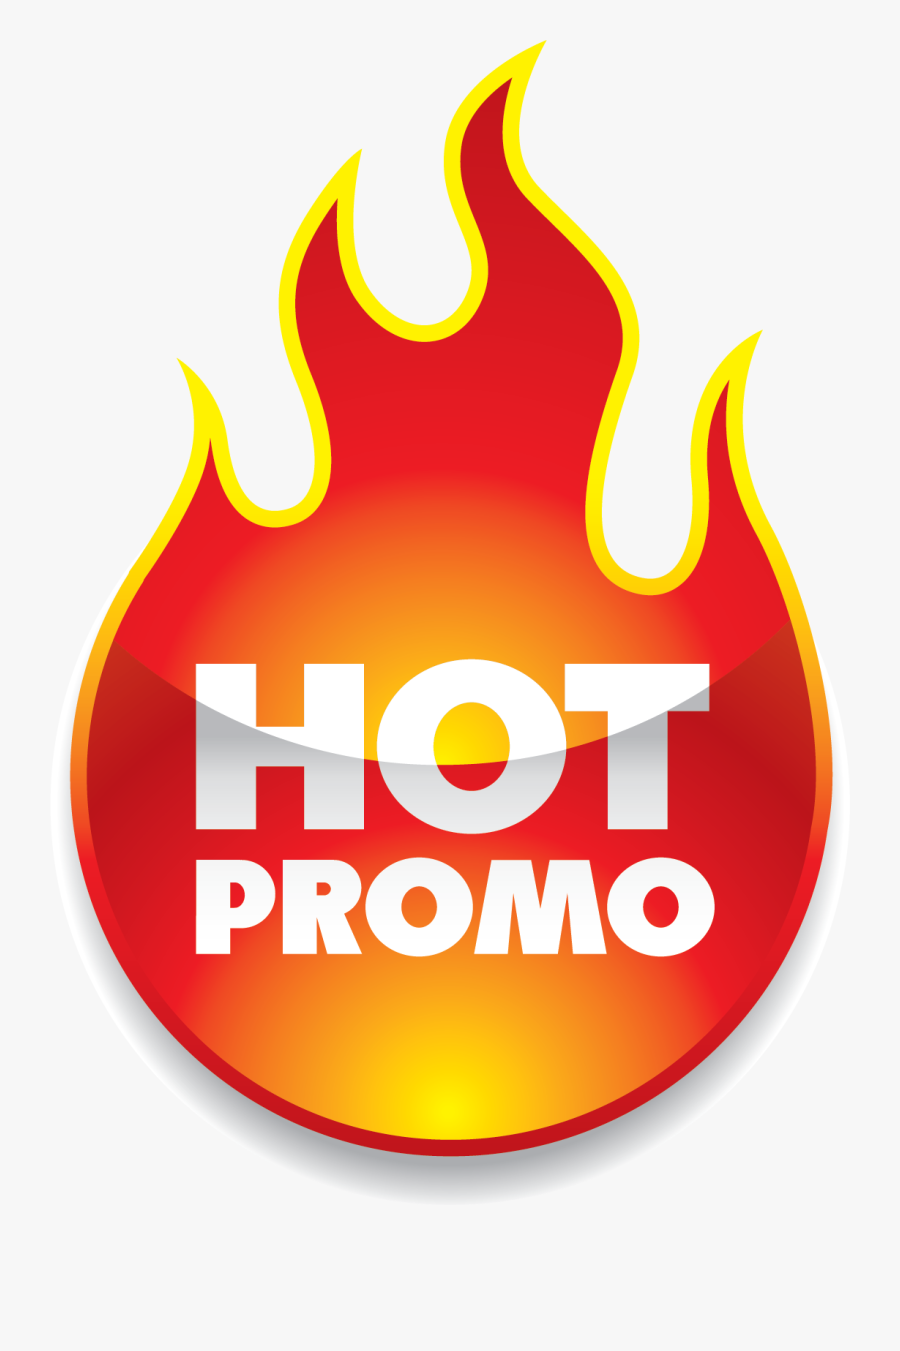 Hot Price Logo Png, Transparent Clipart